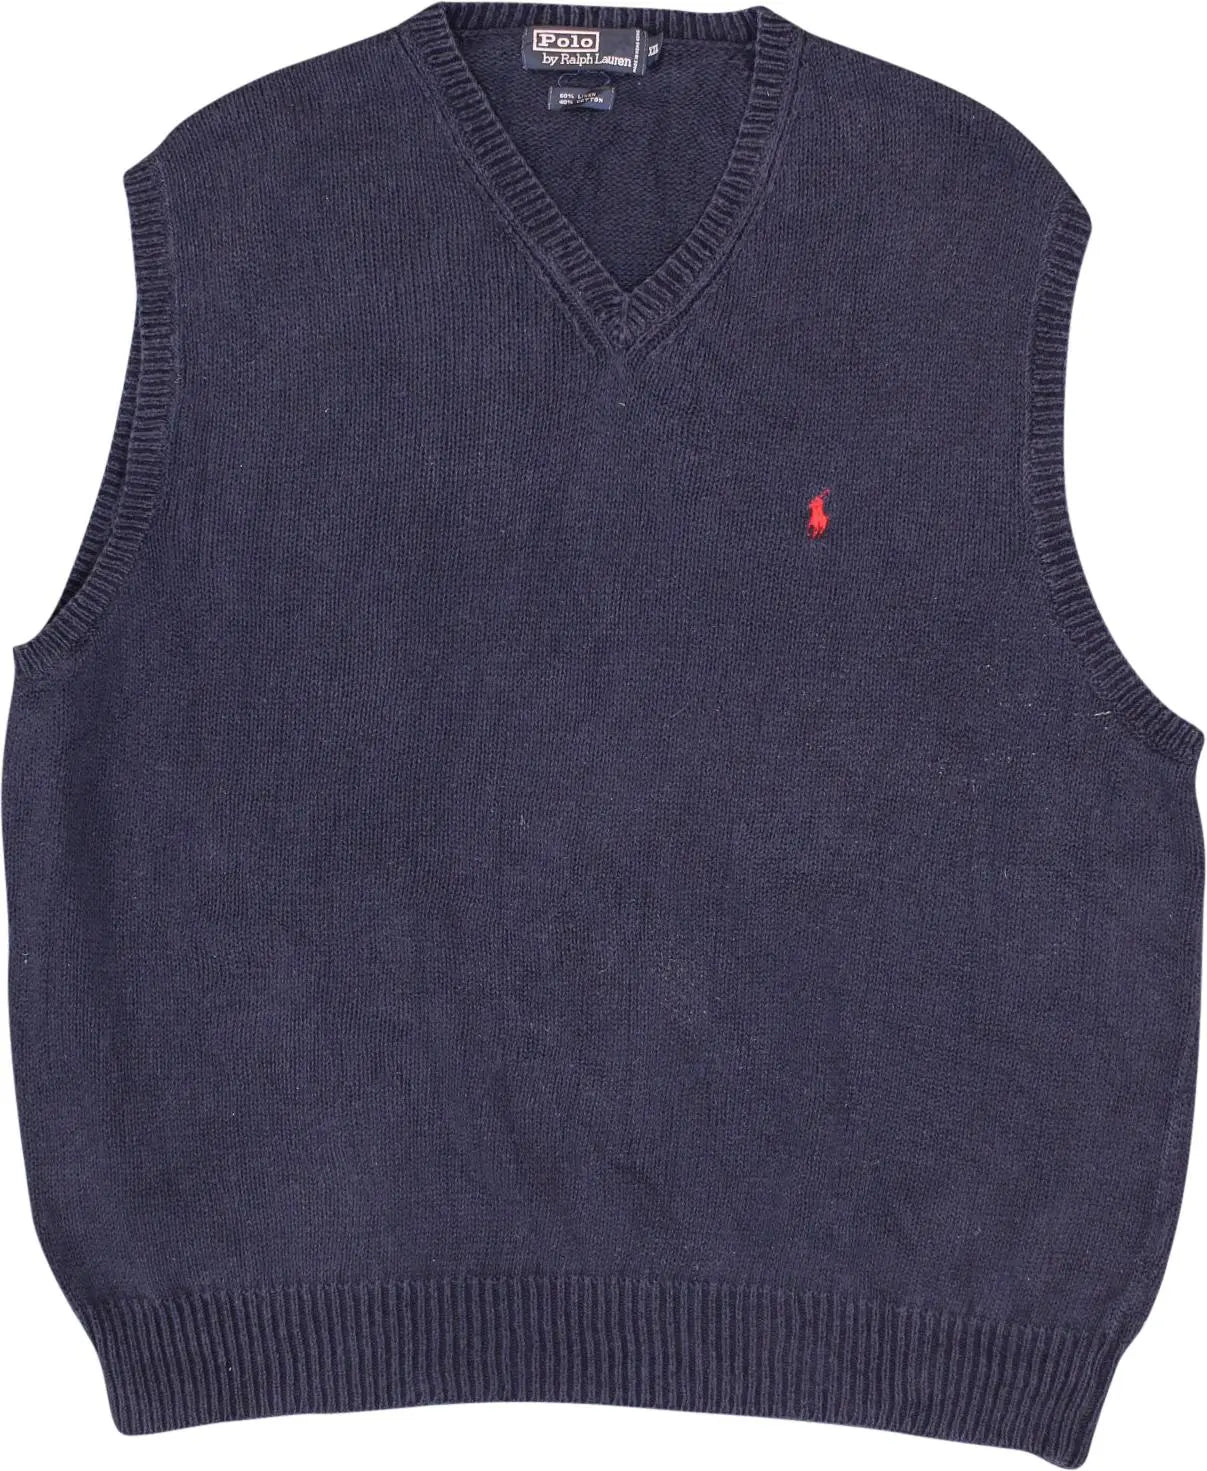 Ralph Lauren - Sleeveless Vest by Ralph Lauren- ThriftTale.com - Vintage and second handclothing